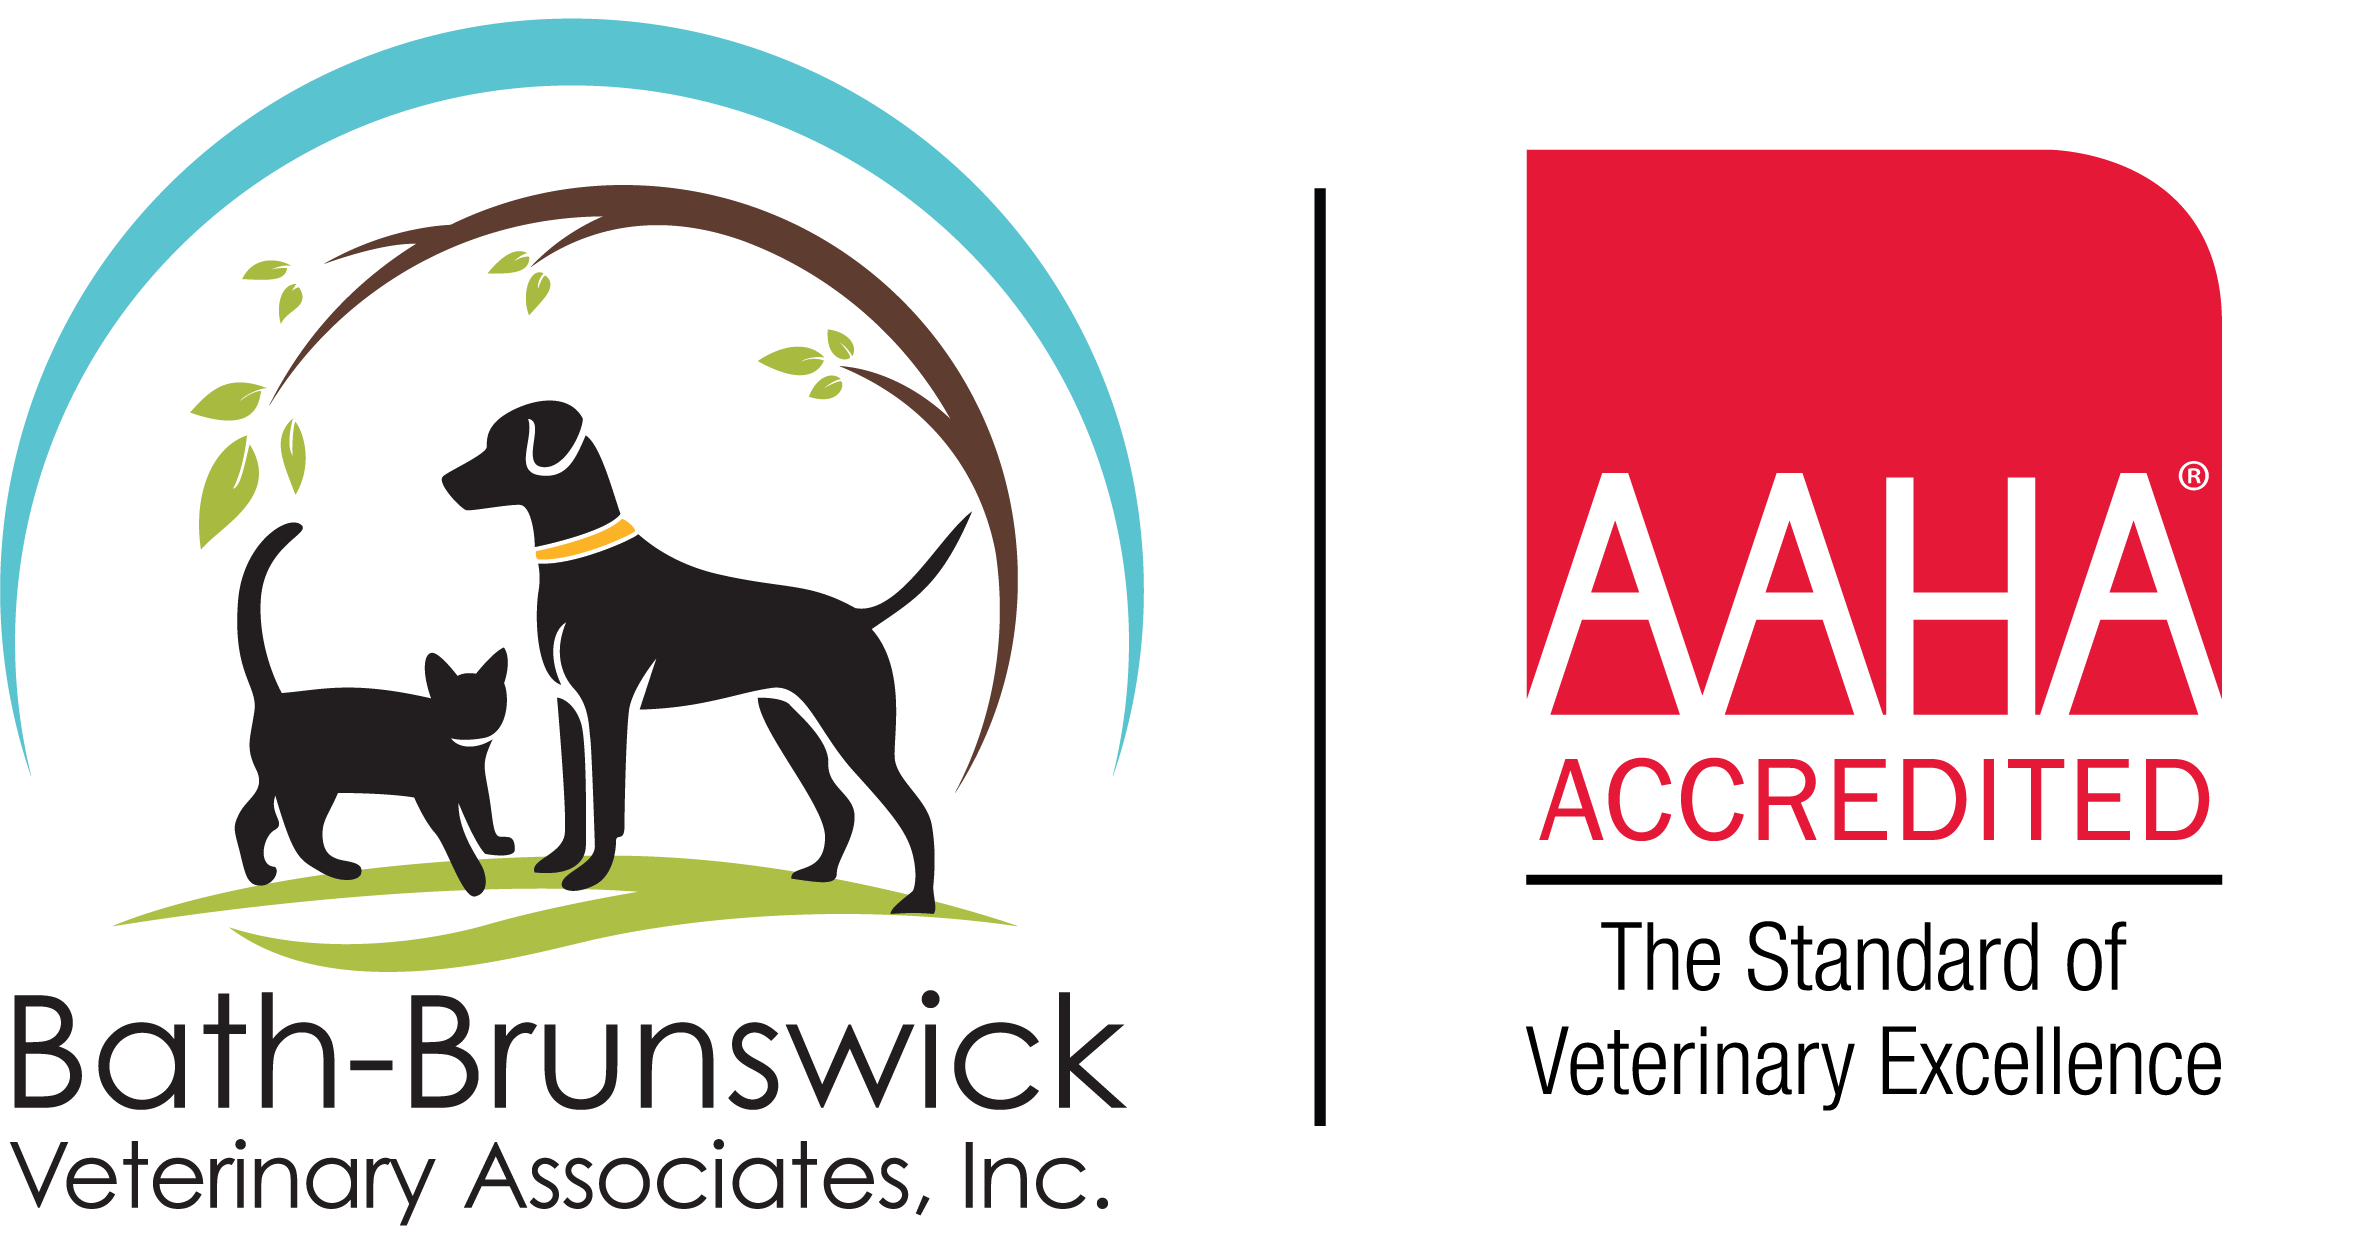 Bath-Brunswick Veterinary Associates